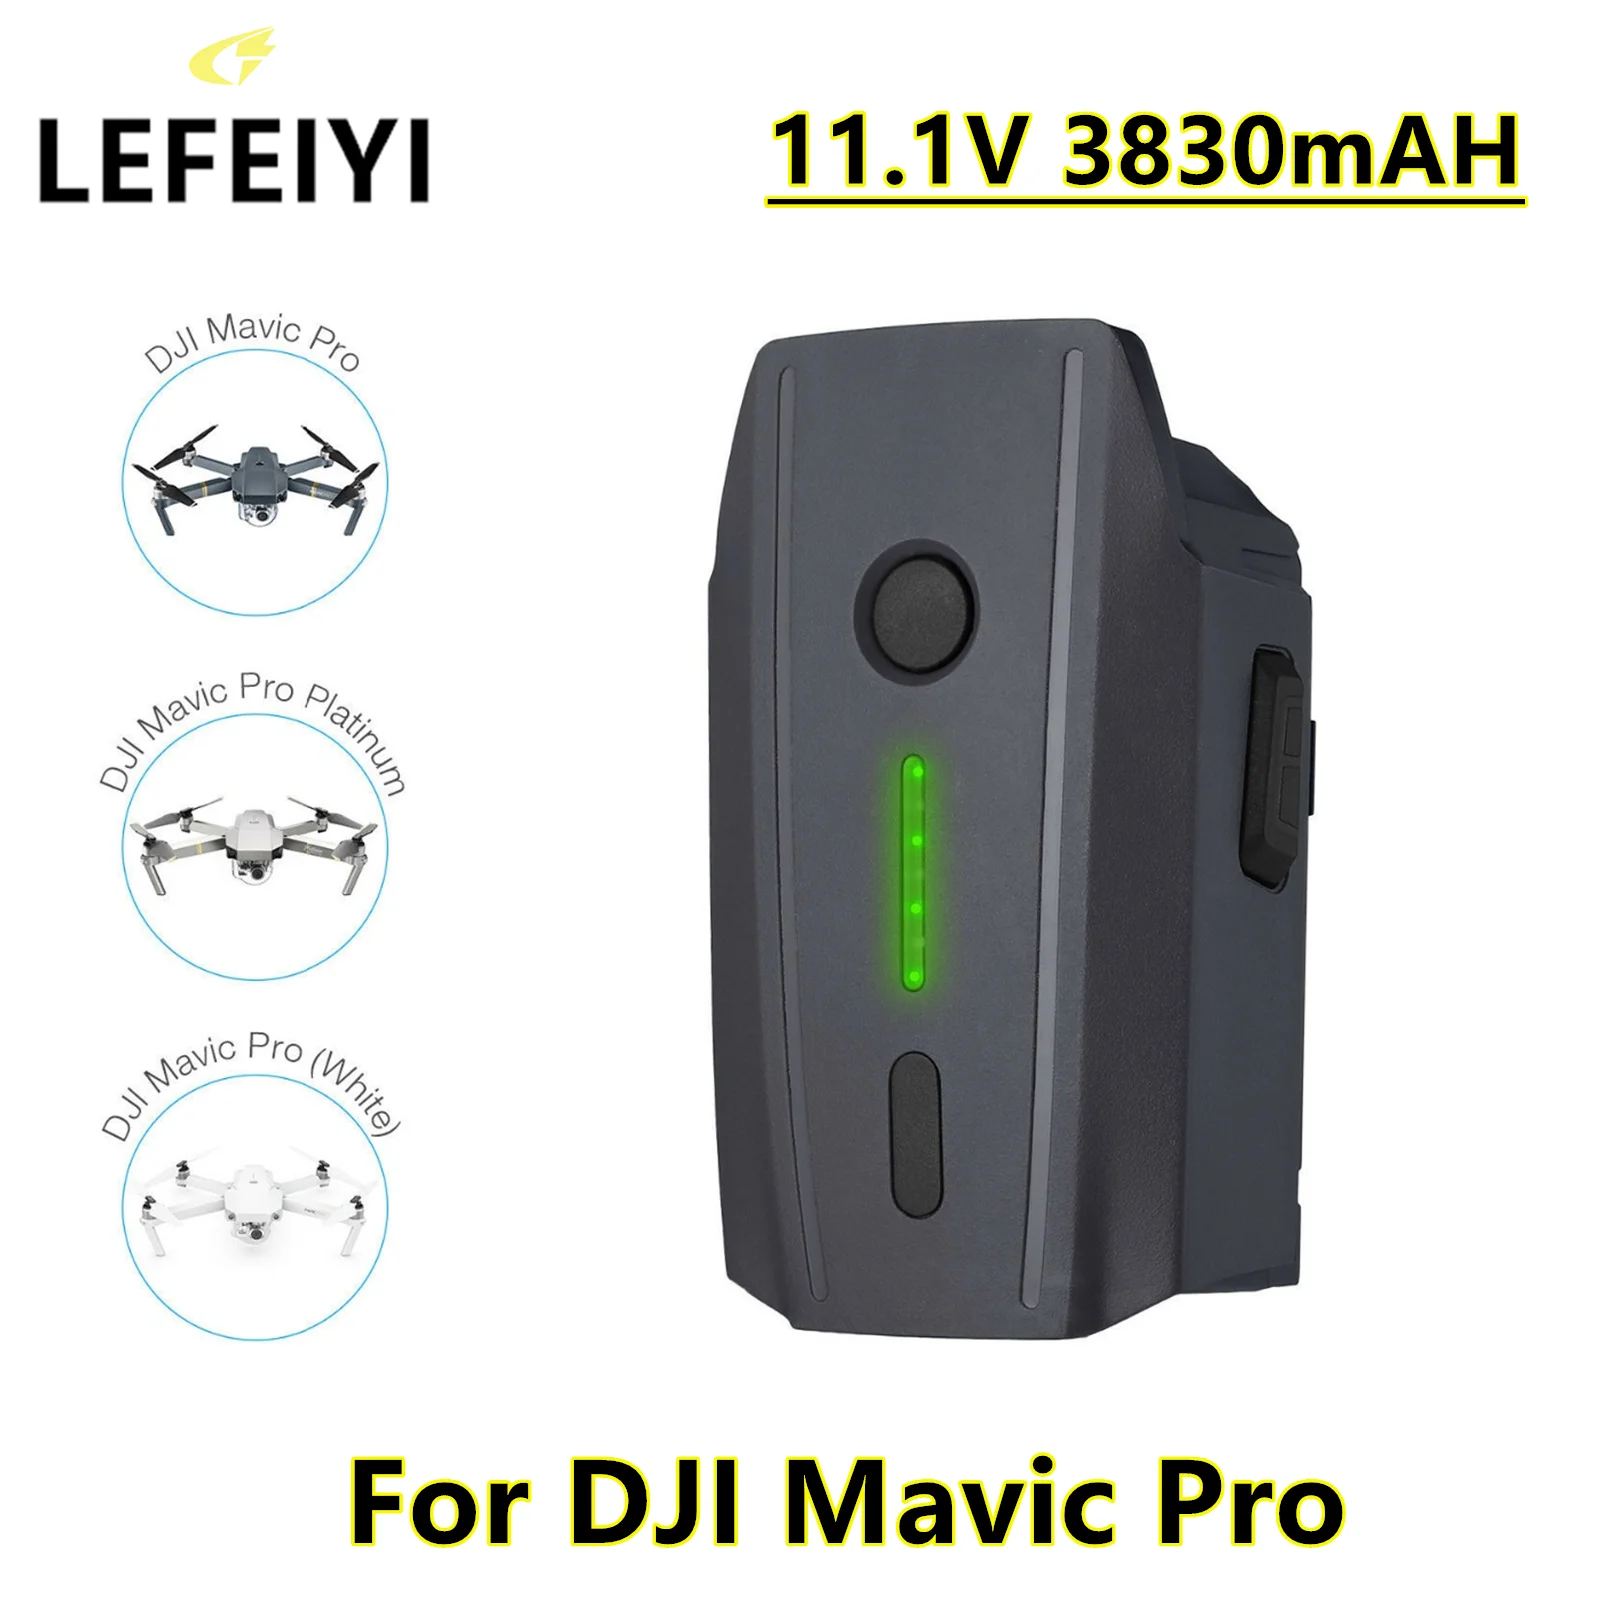 

LEFEIYI 11.1V 3830mAH For DJI Mavic Pro / Platinum /White Intelligent Flight LiPo 3S Battery